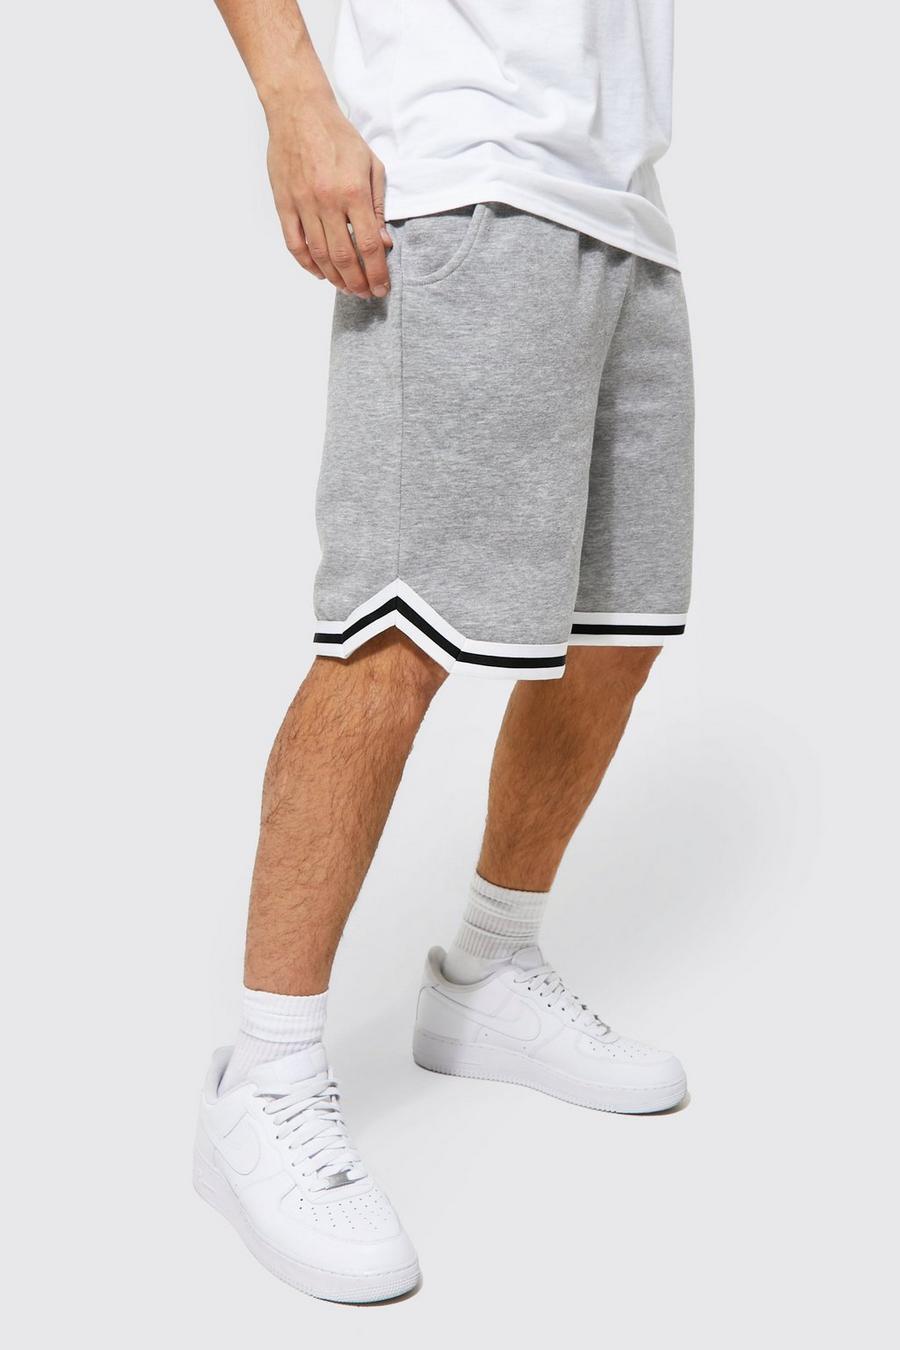 Pantaloncini da basket in cotone REEL con striscia, Grey grigio